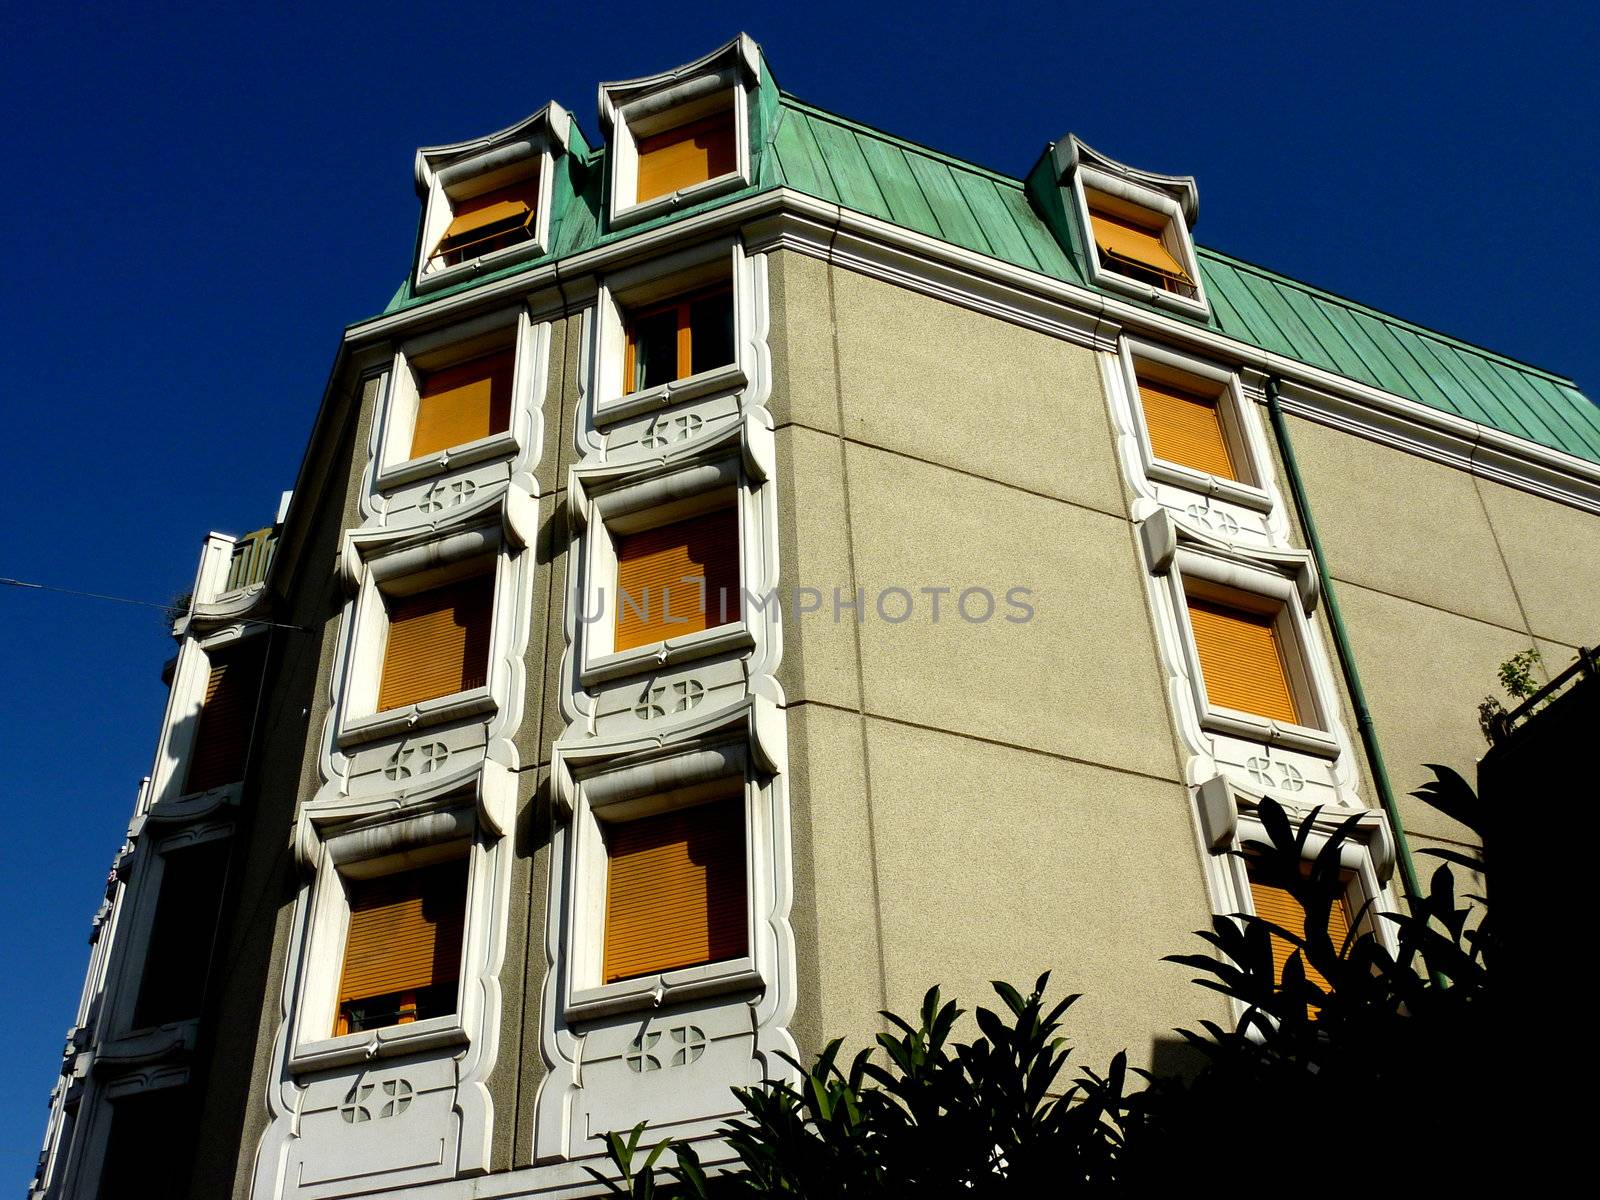 Original facade of a building by Elenaphotos21